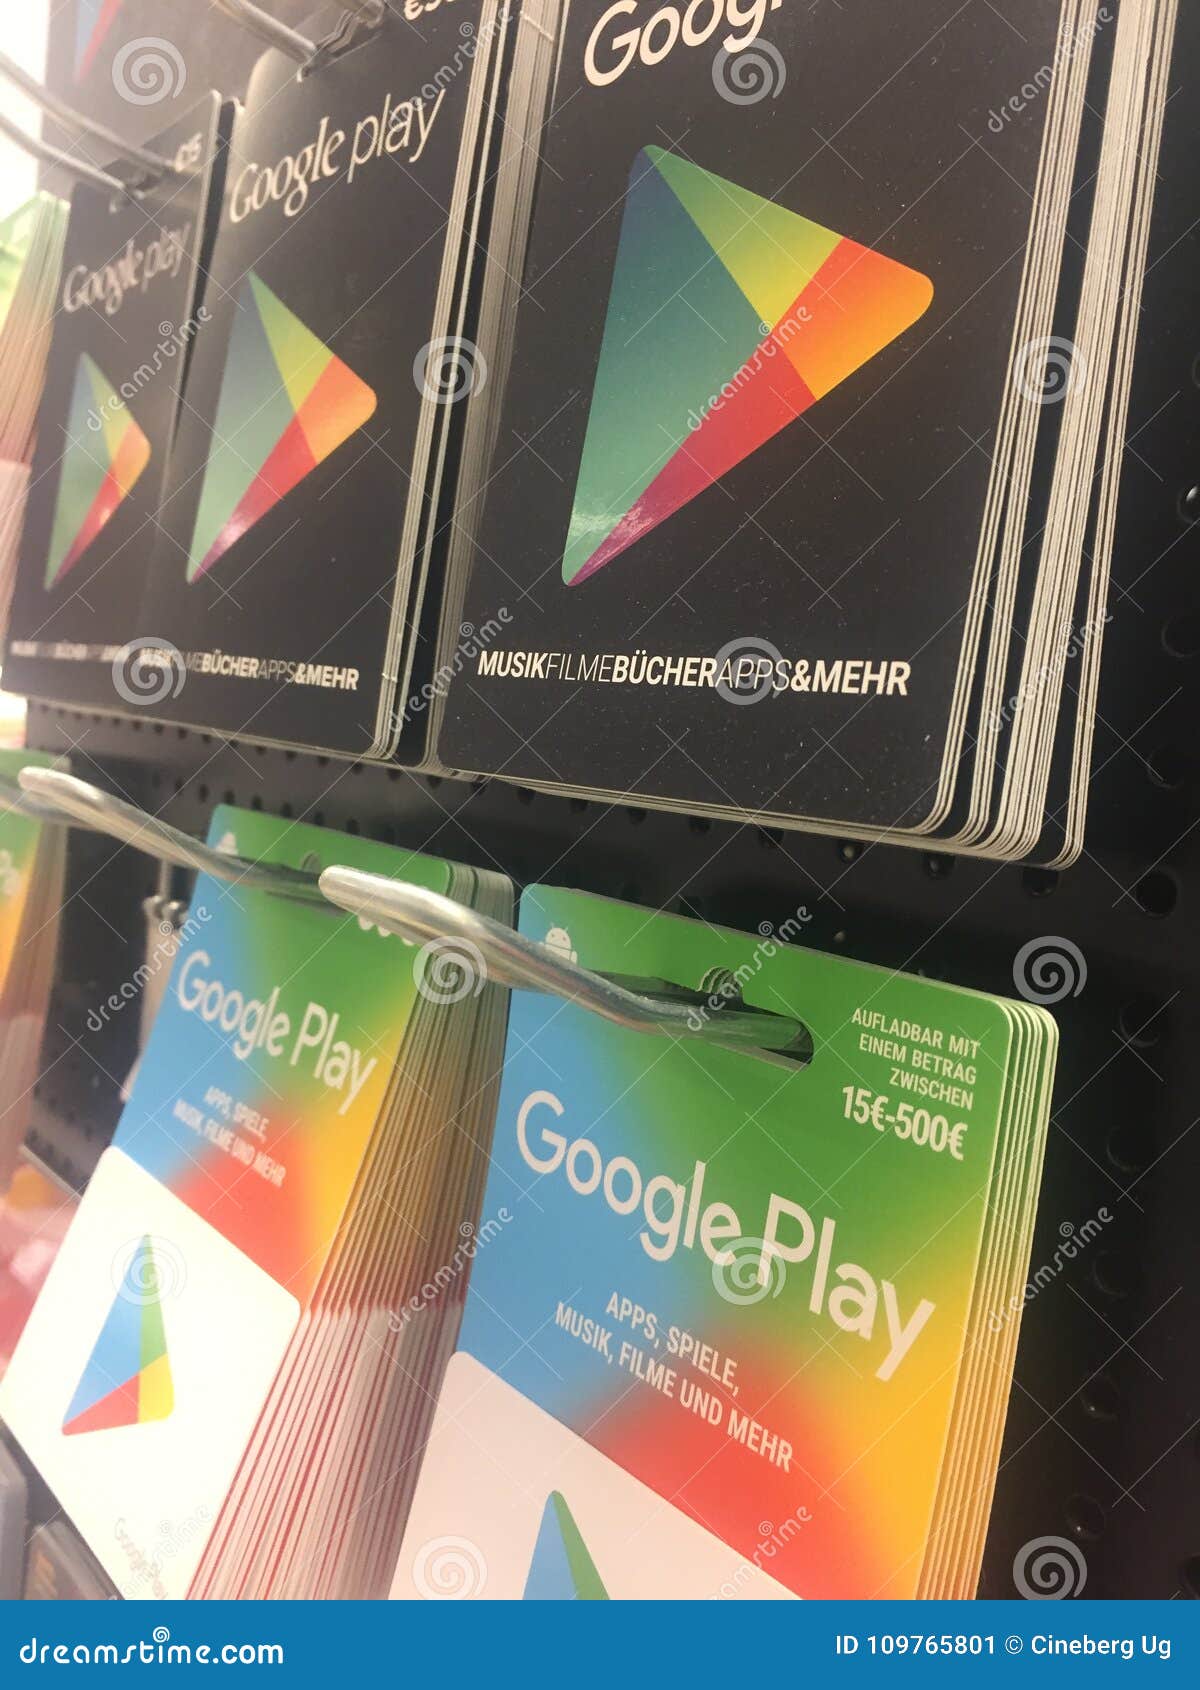 Gift Card Google Play 500 reais - Código Digital - Playce - Games